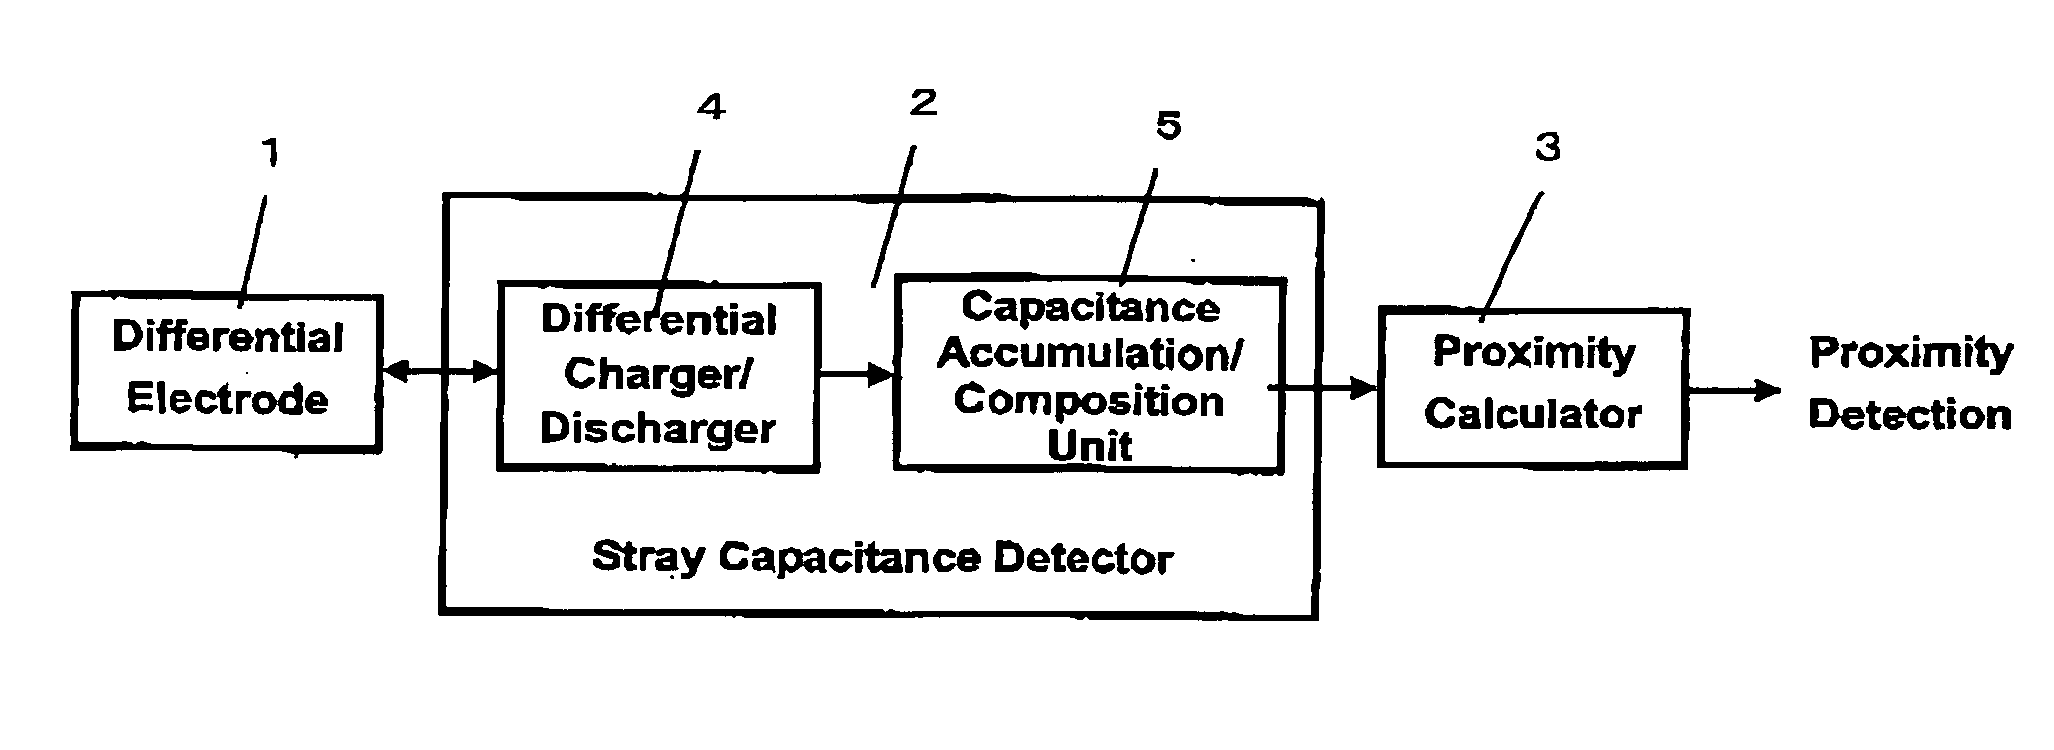 Proximity detector and proximity detecting method